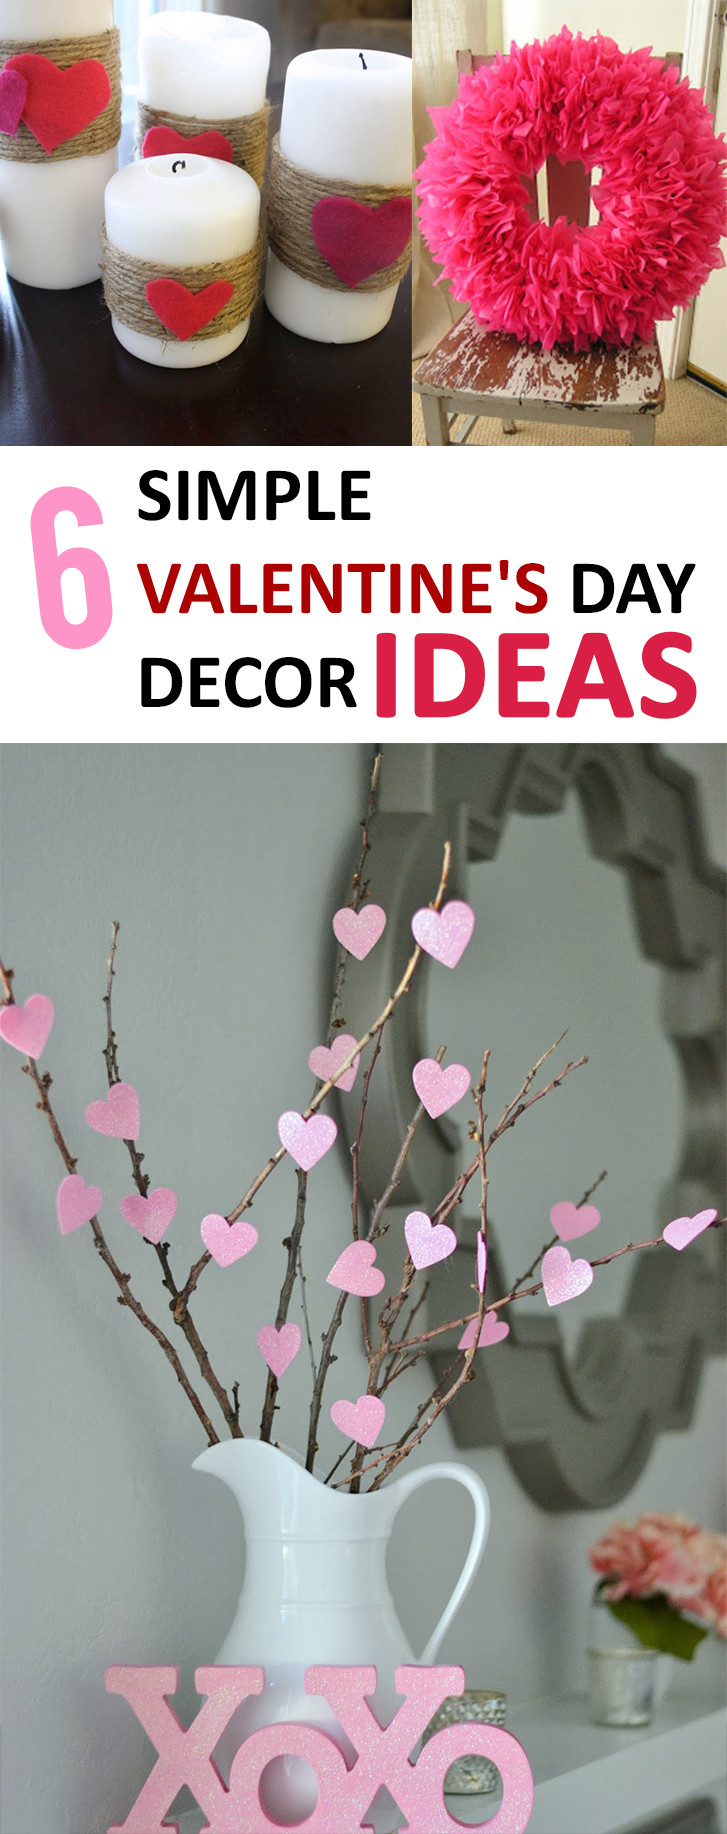 Valentines Day Decor Ideas
 6 Simple Valentine’s Day Décor Ideas – Sunlit Spaces